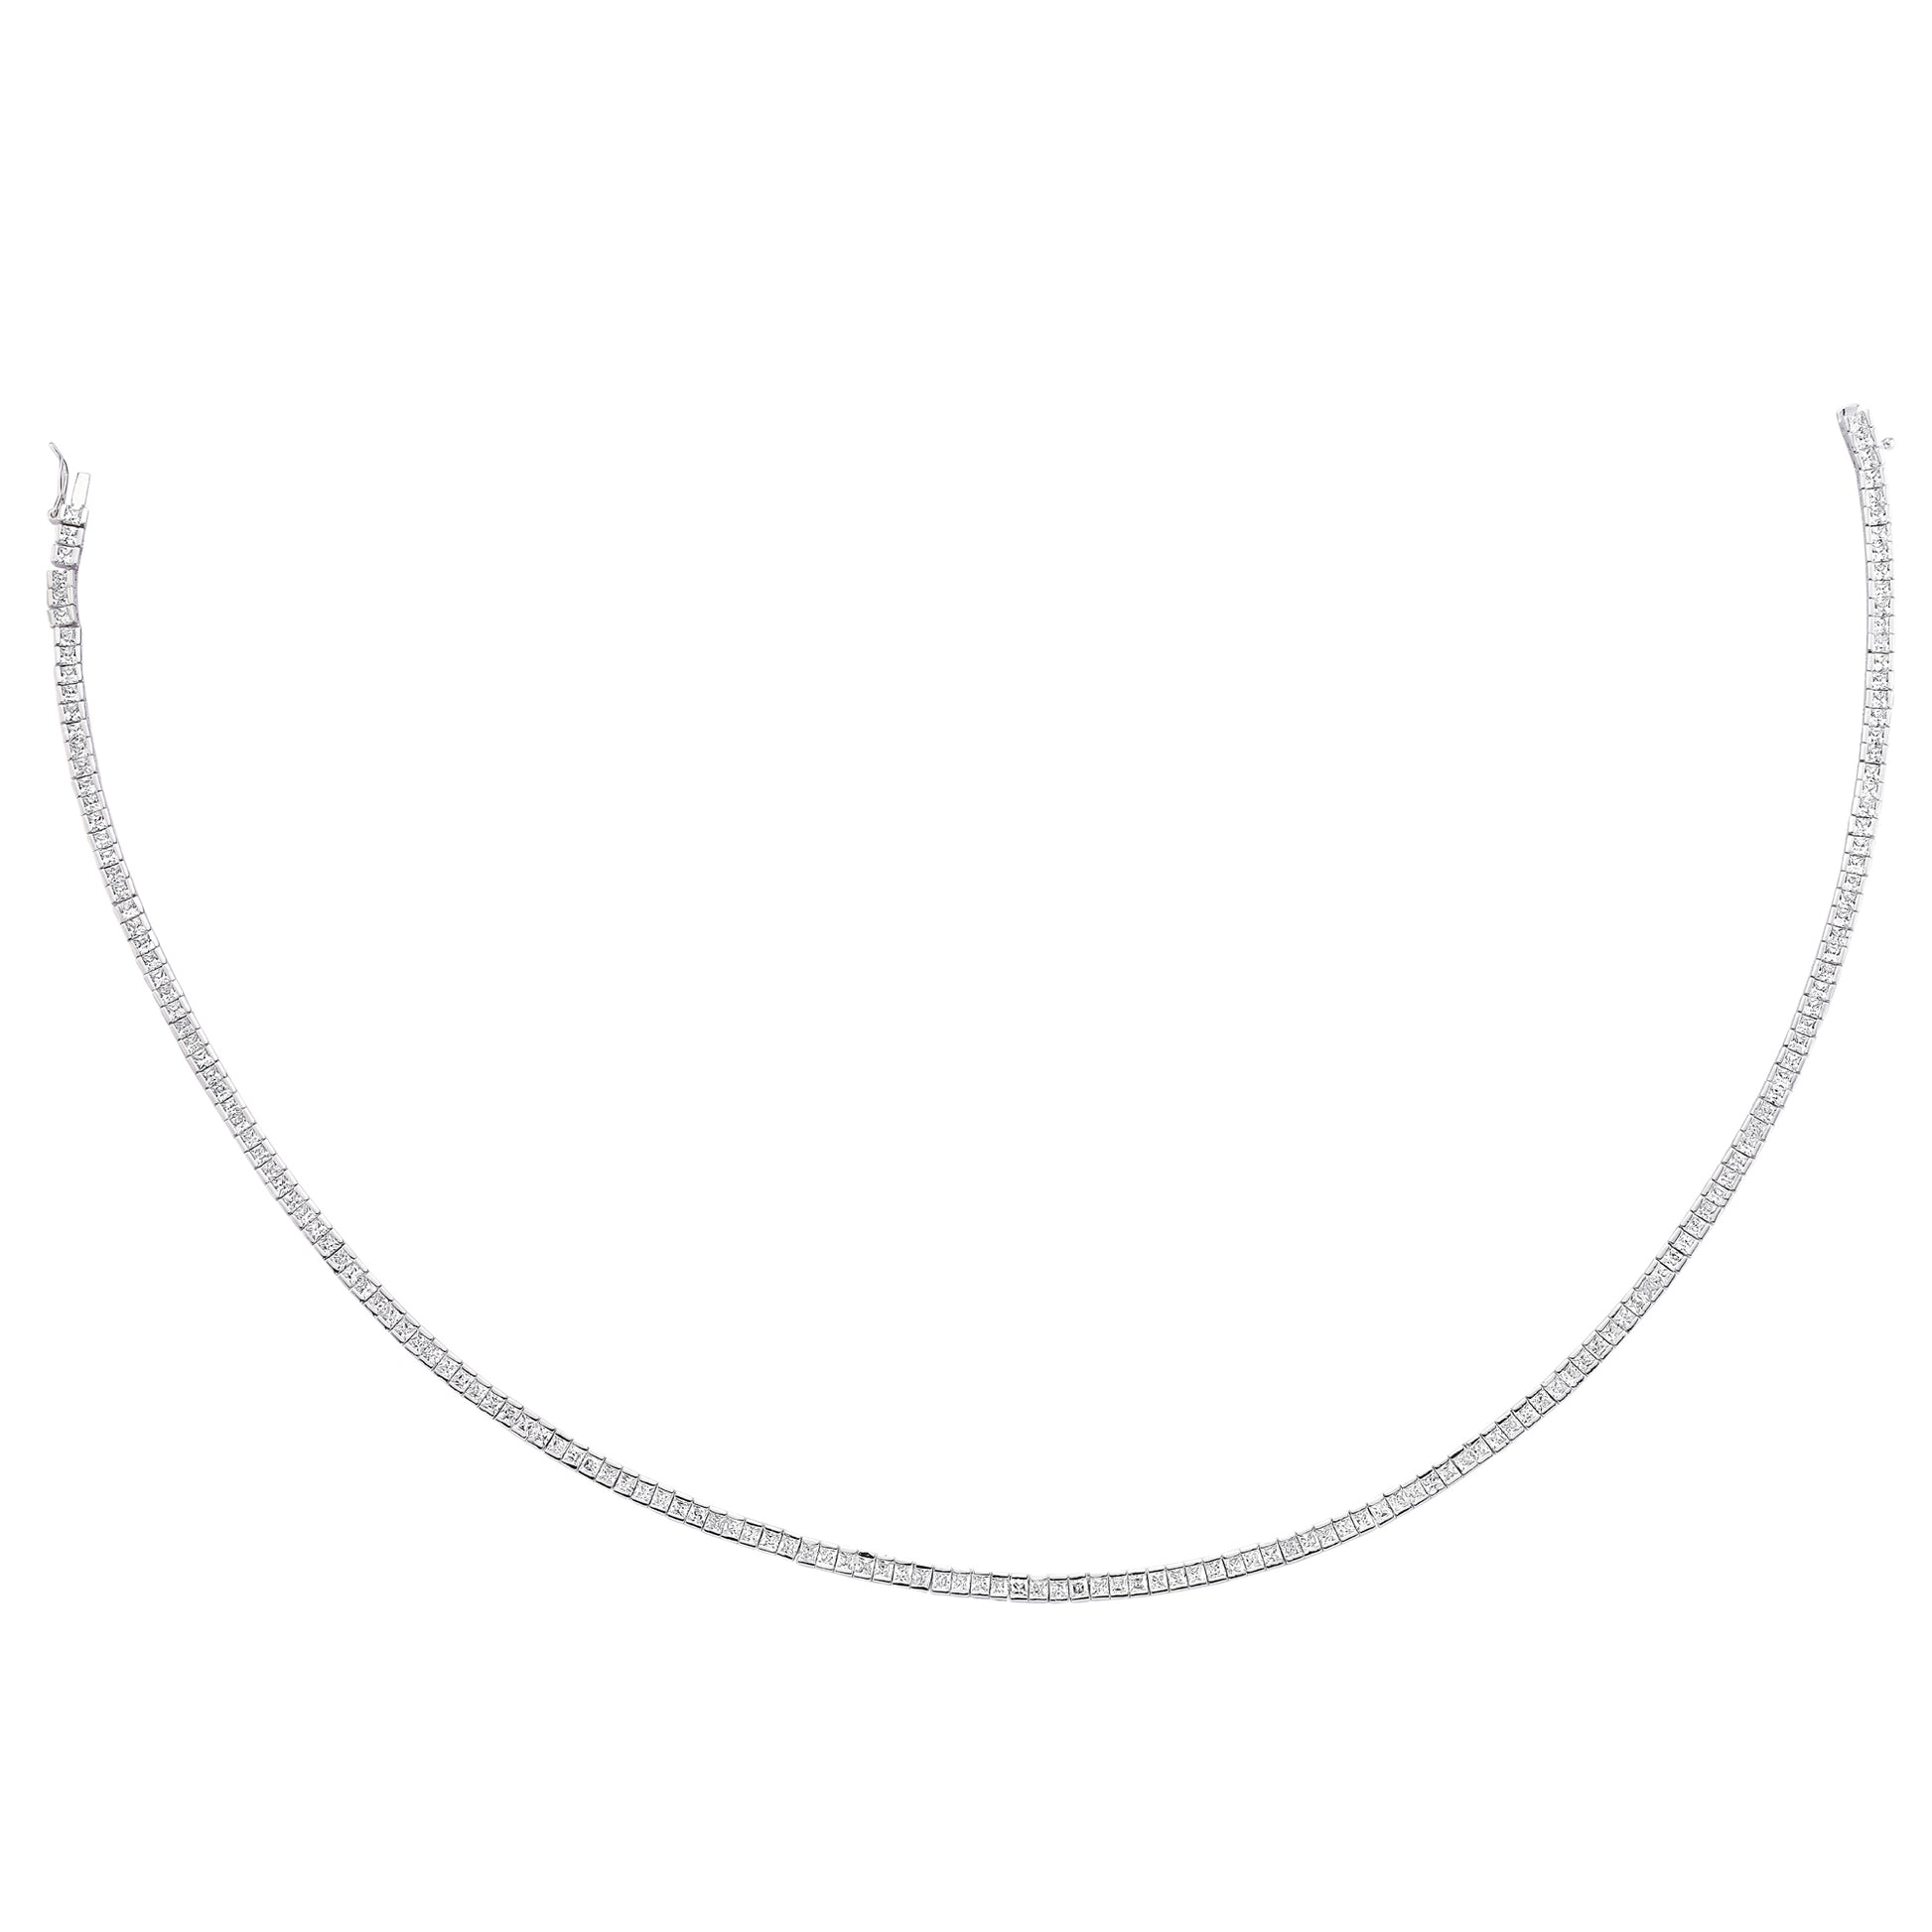 Silver  Princess Cut CZ Eternity Line Necklace 4mm 16 inch - GVK051